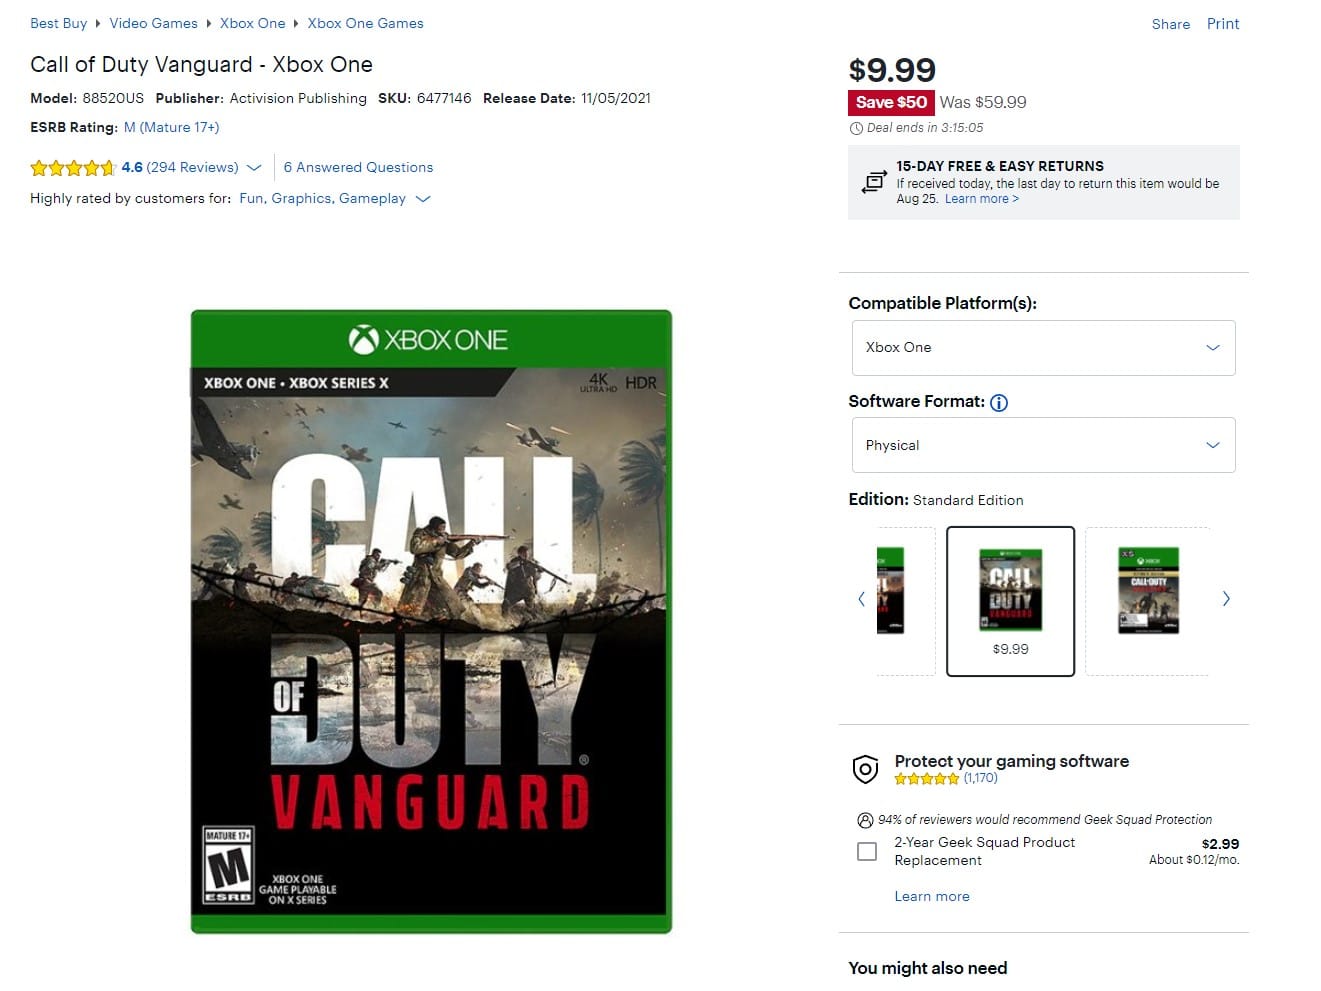 Call of Duty Vanguard en Xbox está a $9.99 en Best Buy, GamersRD